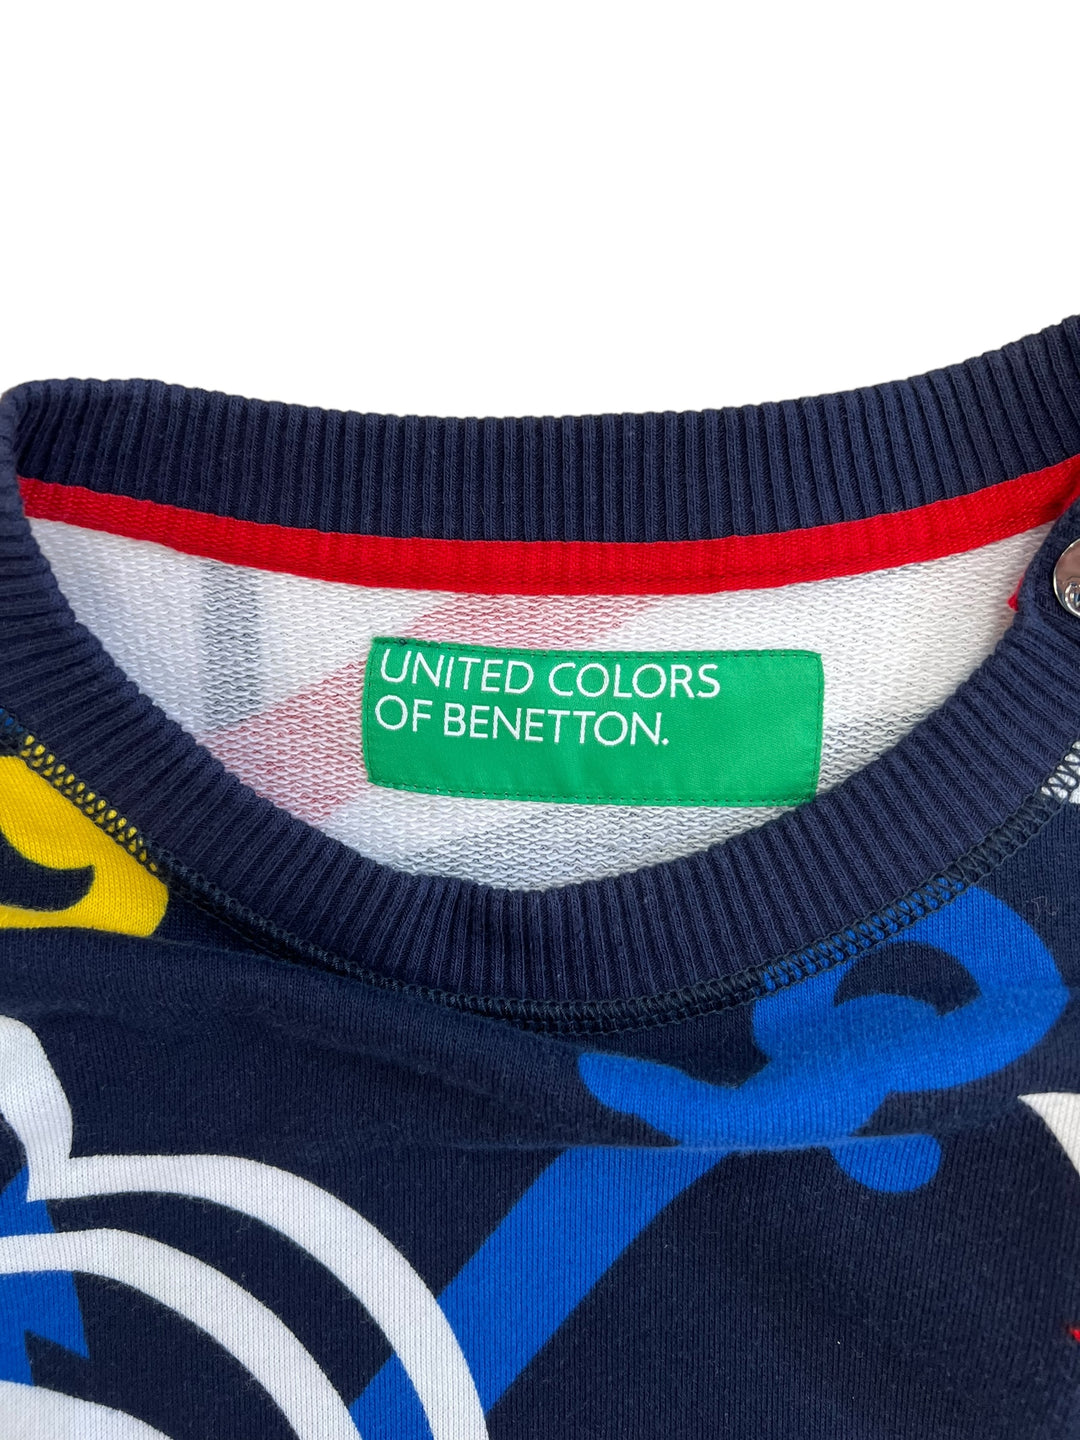 United Colors Of Benetton Sweatshirt Women's Medium